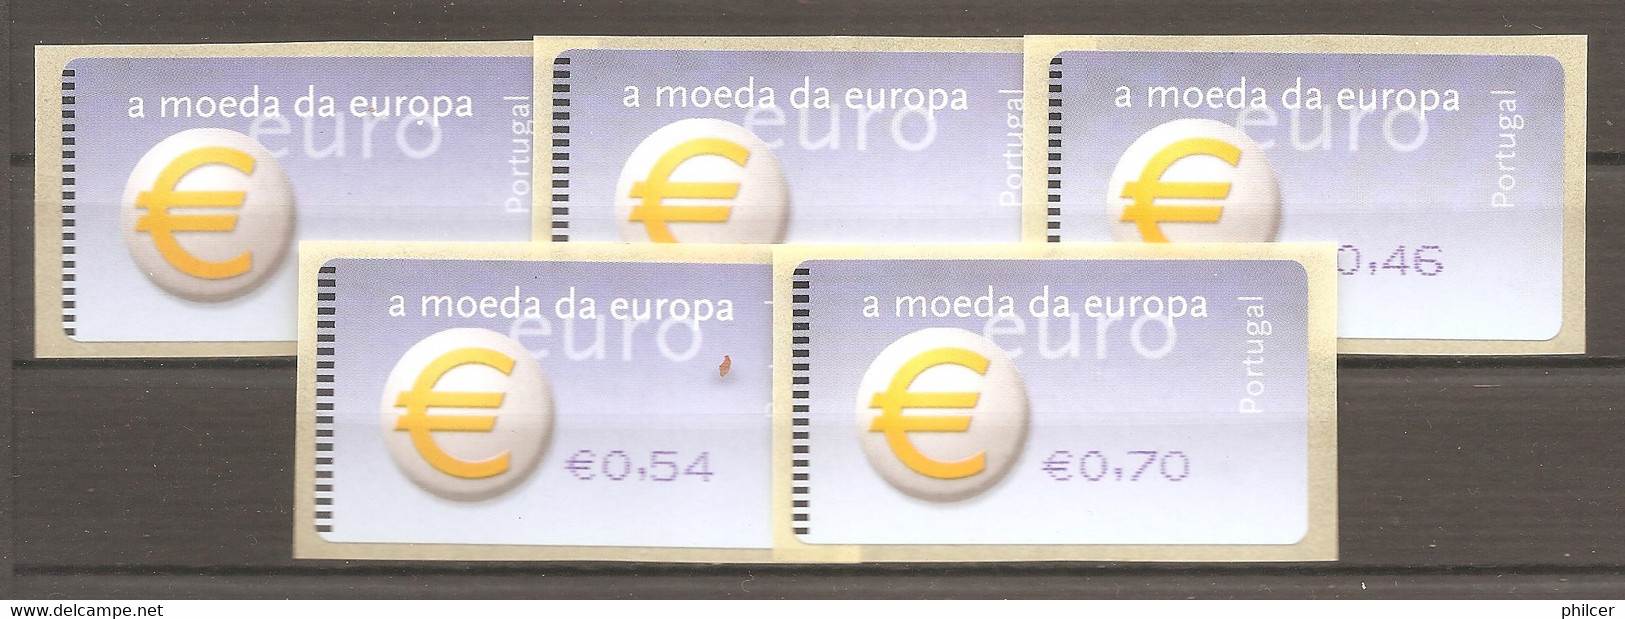 Portugal, 2002, # 23b - Franking Machines (EMA)